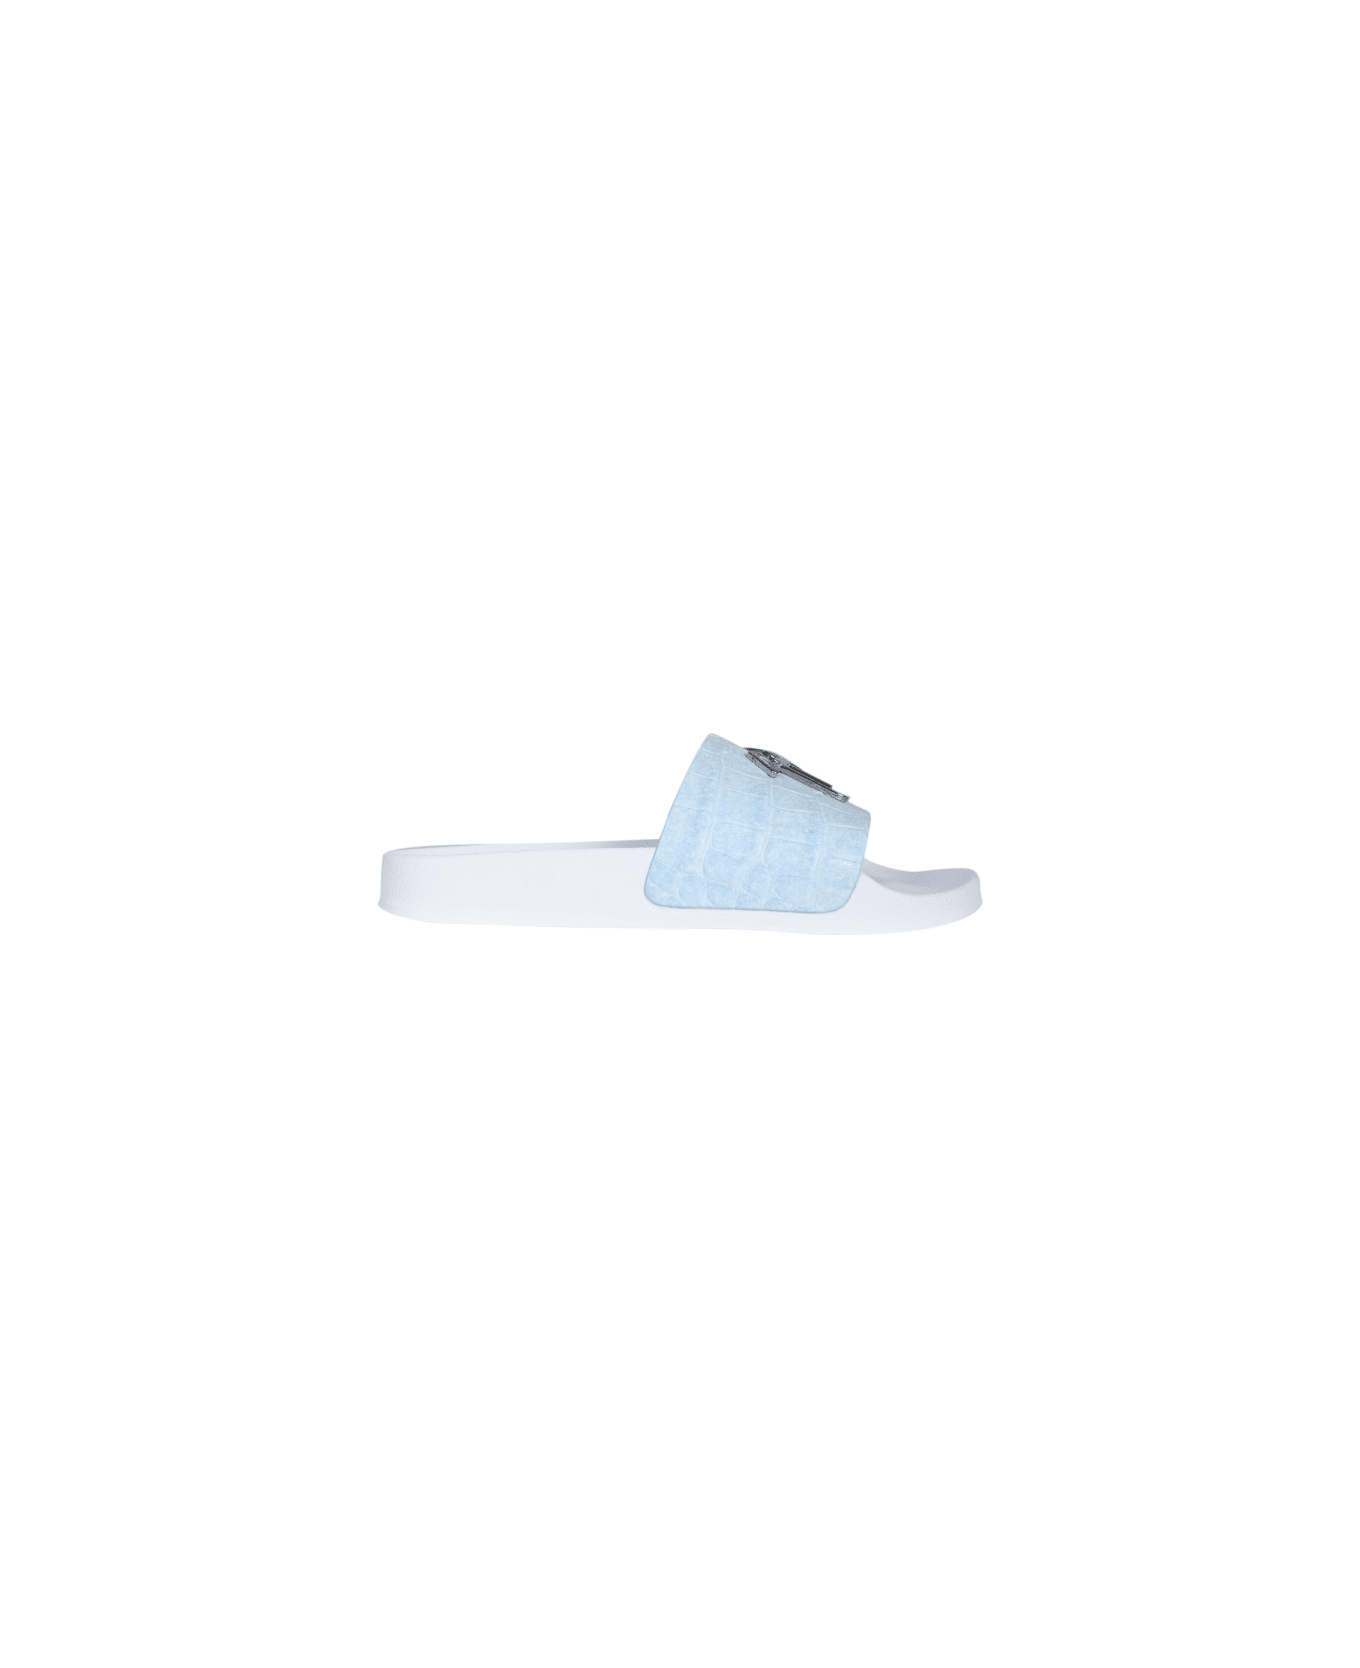 Giuseppe Zanotti Slide Sandals With Logo - BABY BLUE